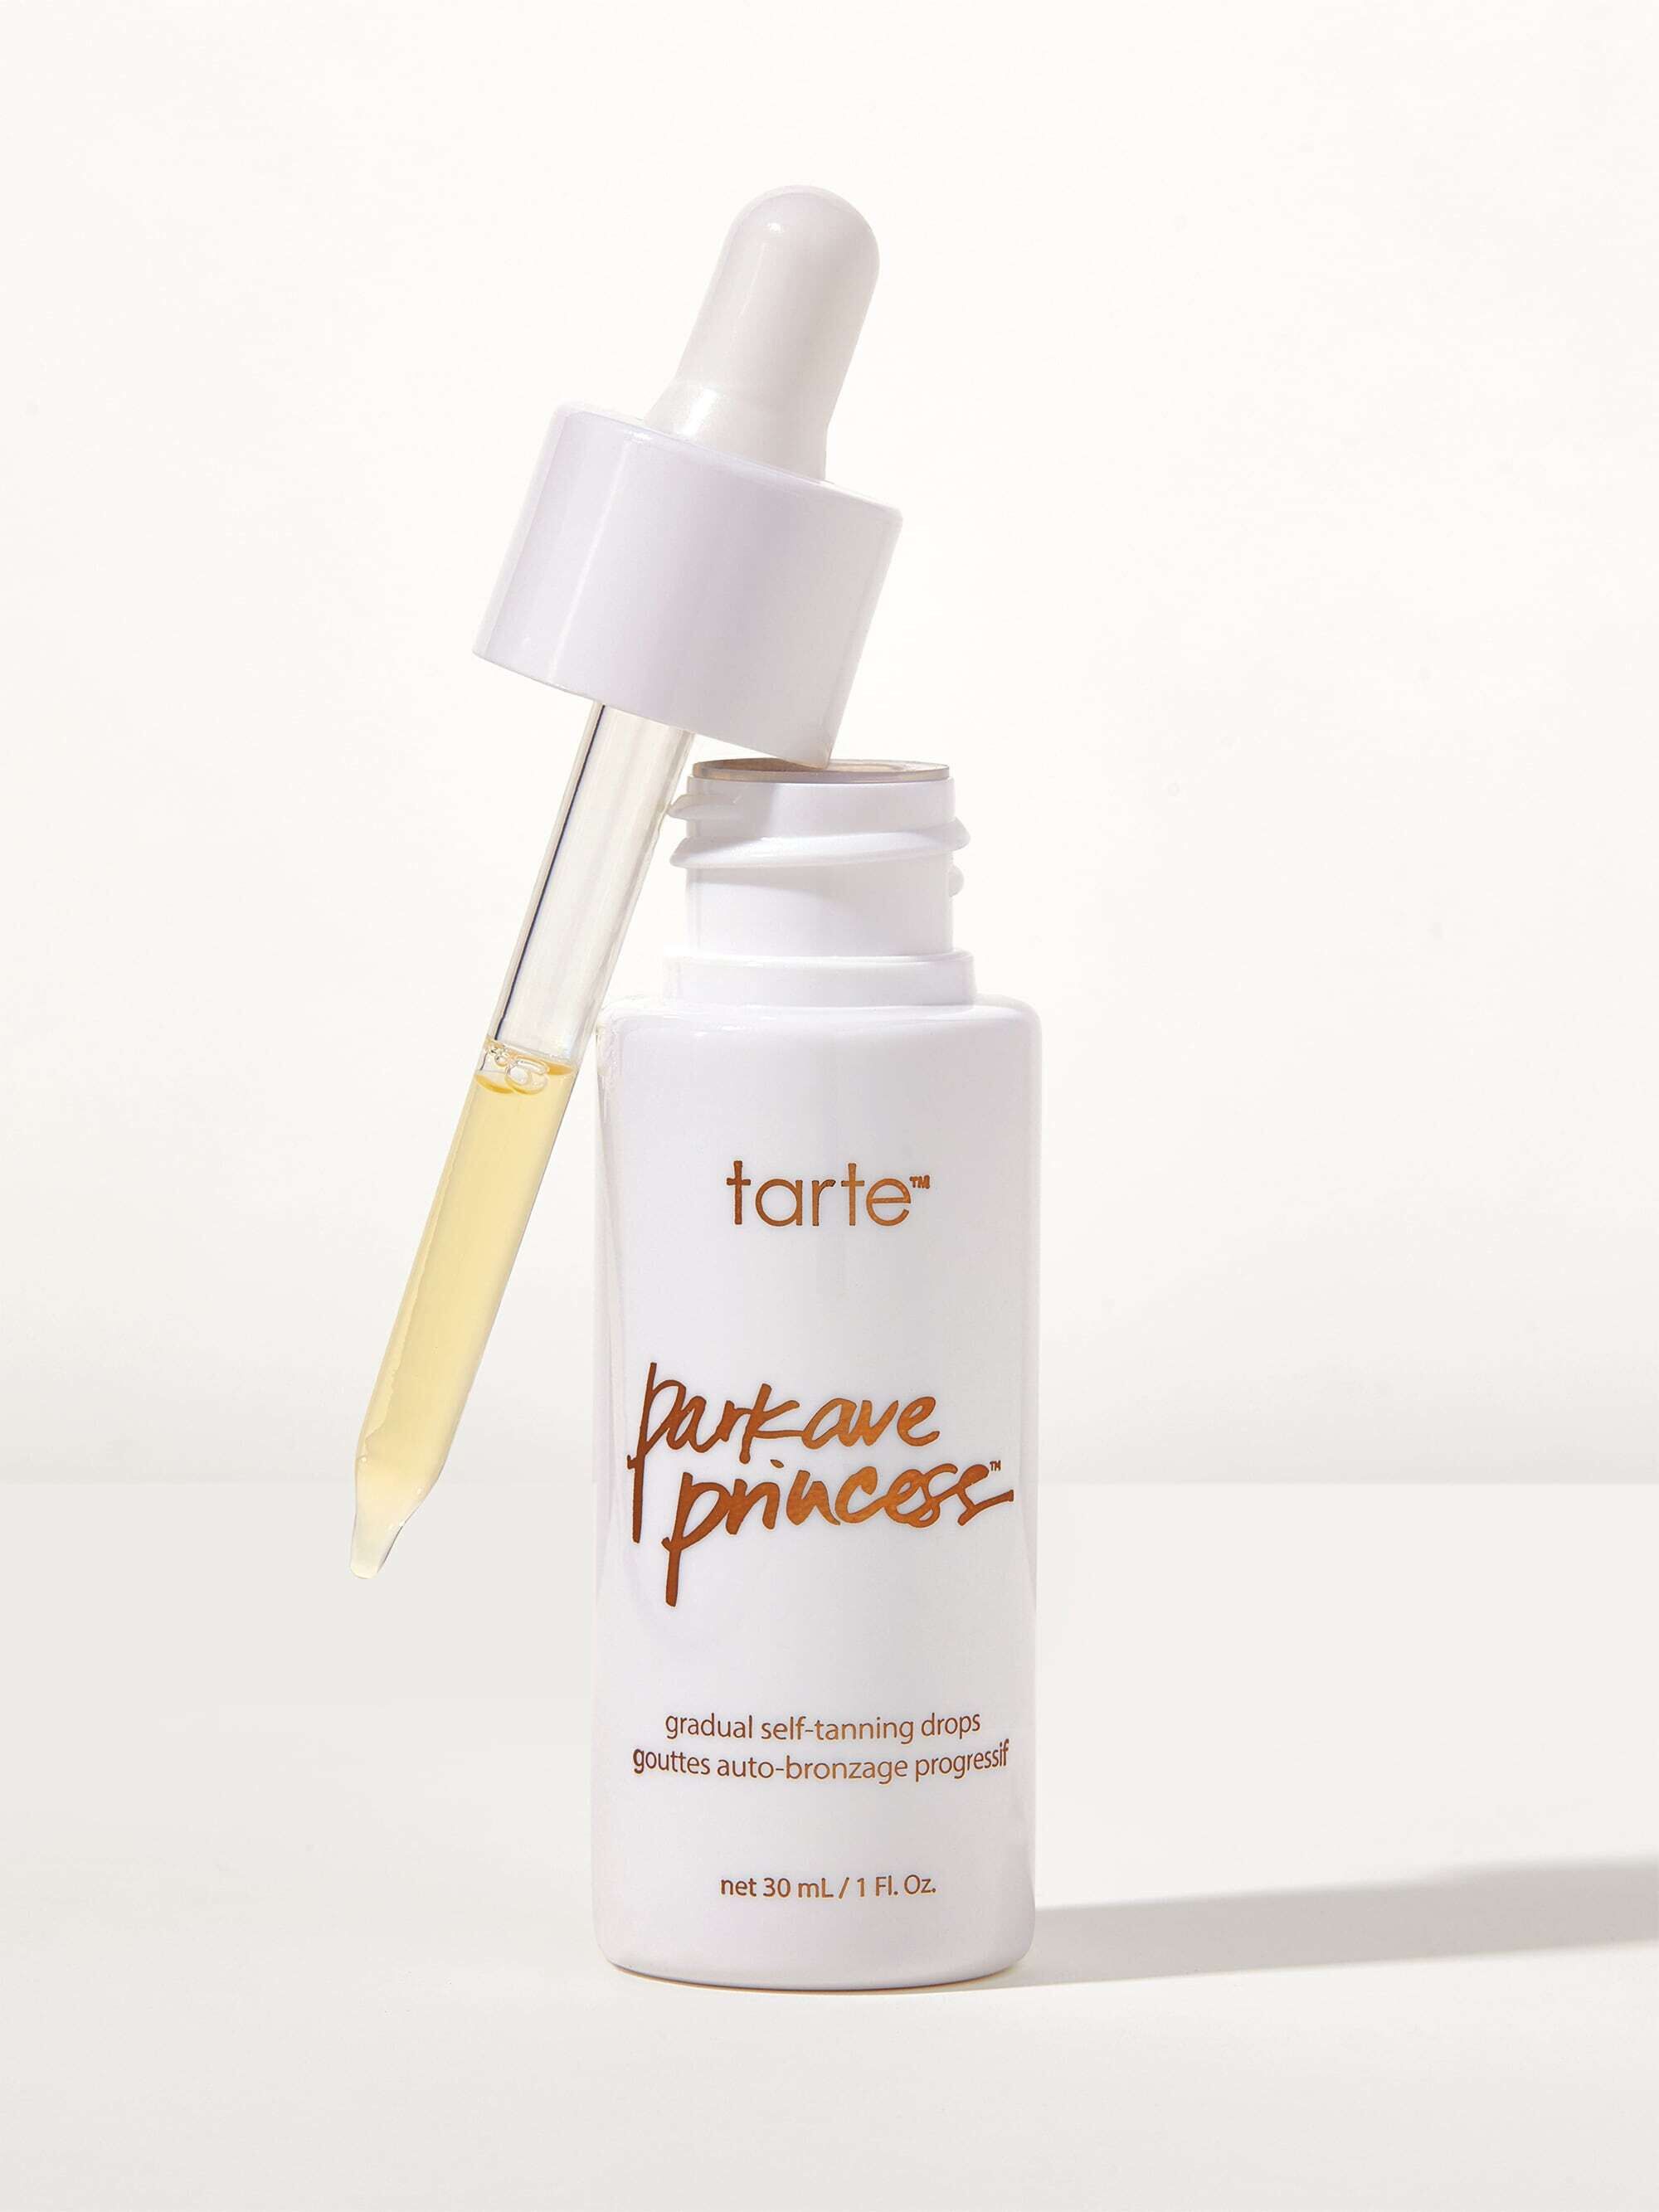 park ave princess™ gradual self-tanning drops | tarte cosmetics (US)